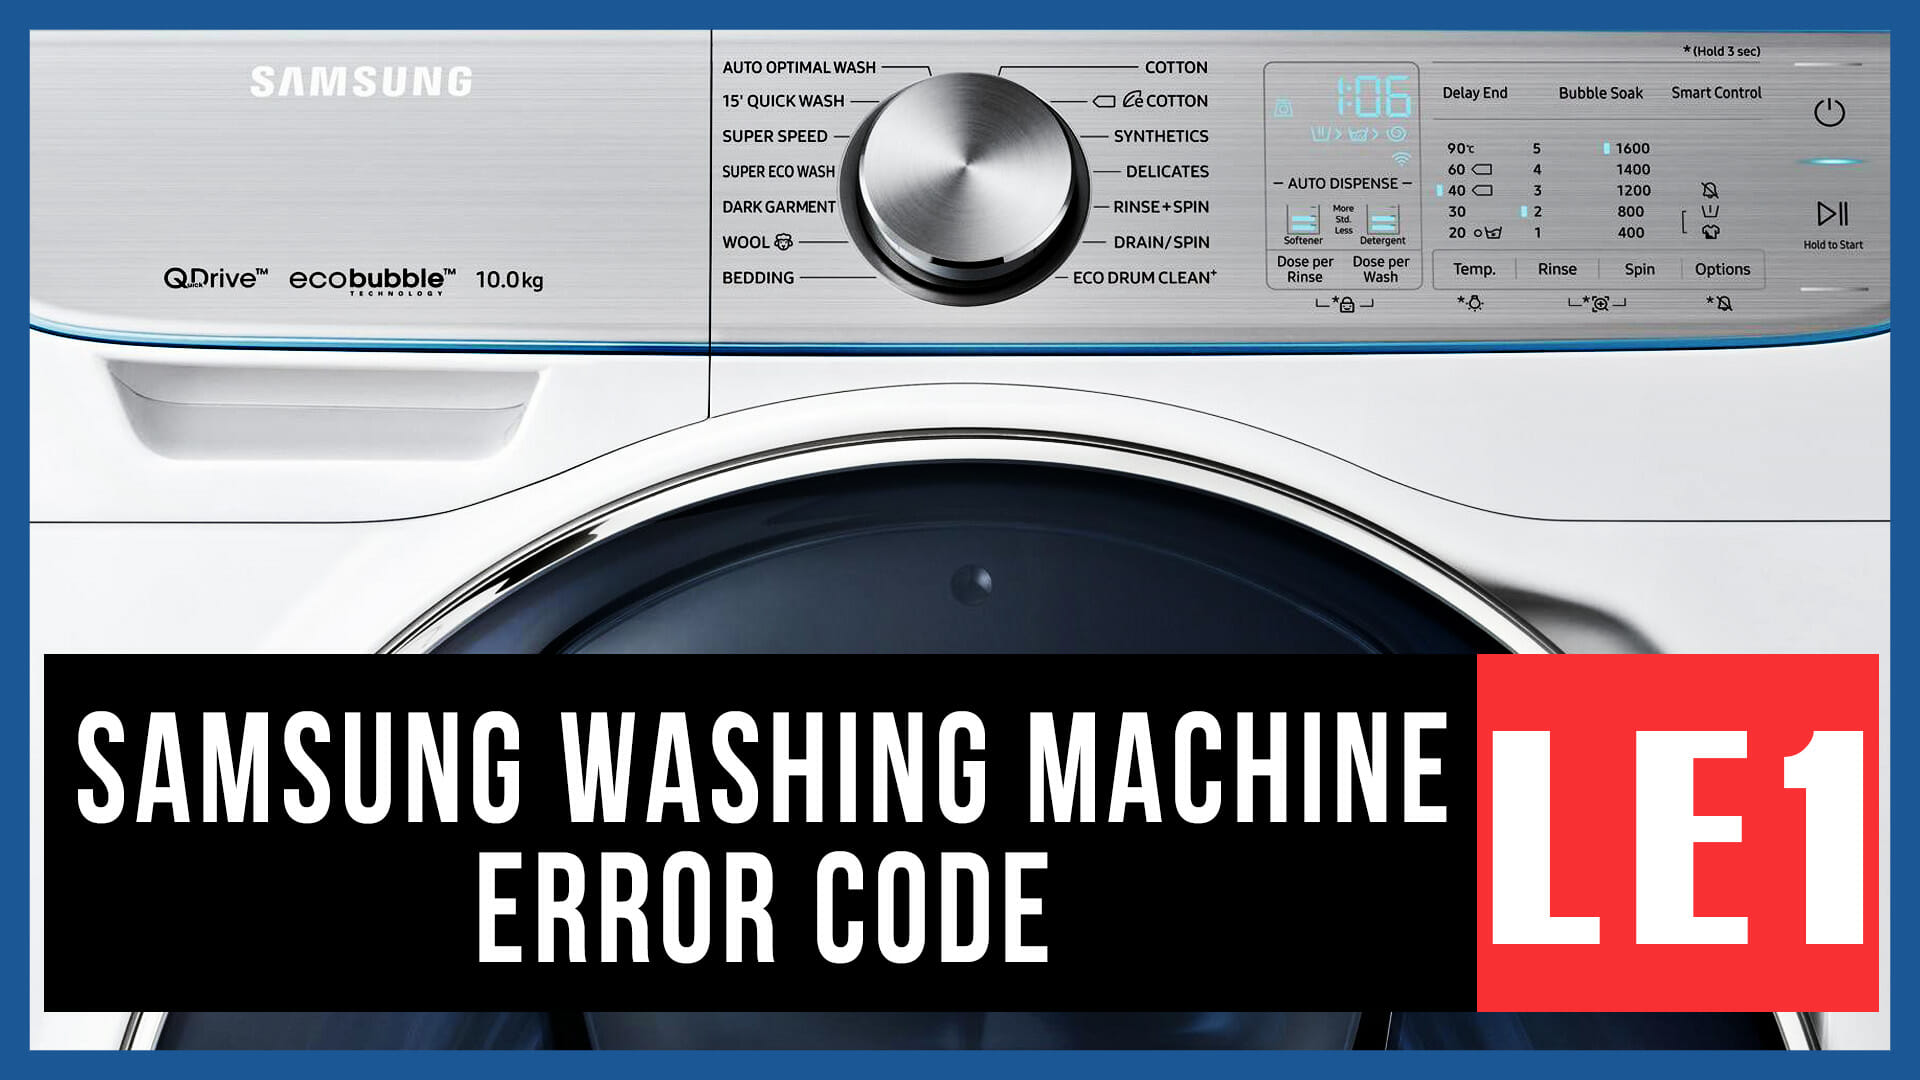 segment lager I mængde Samsung washer error code LE1 : Causes, How FIX Problem